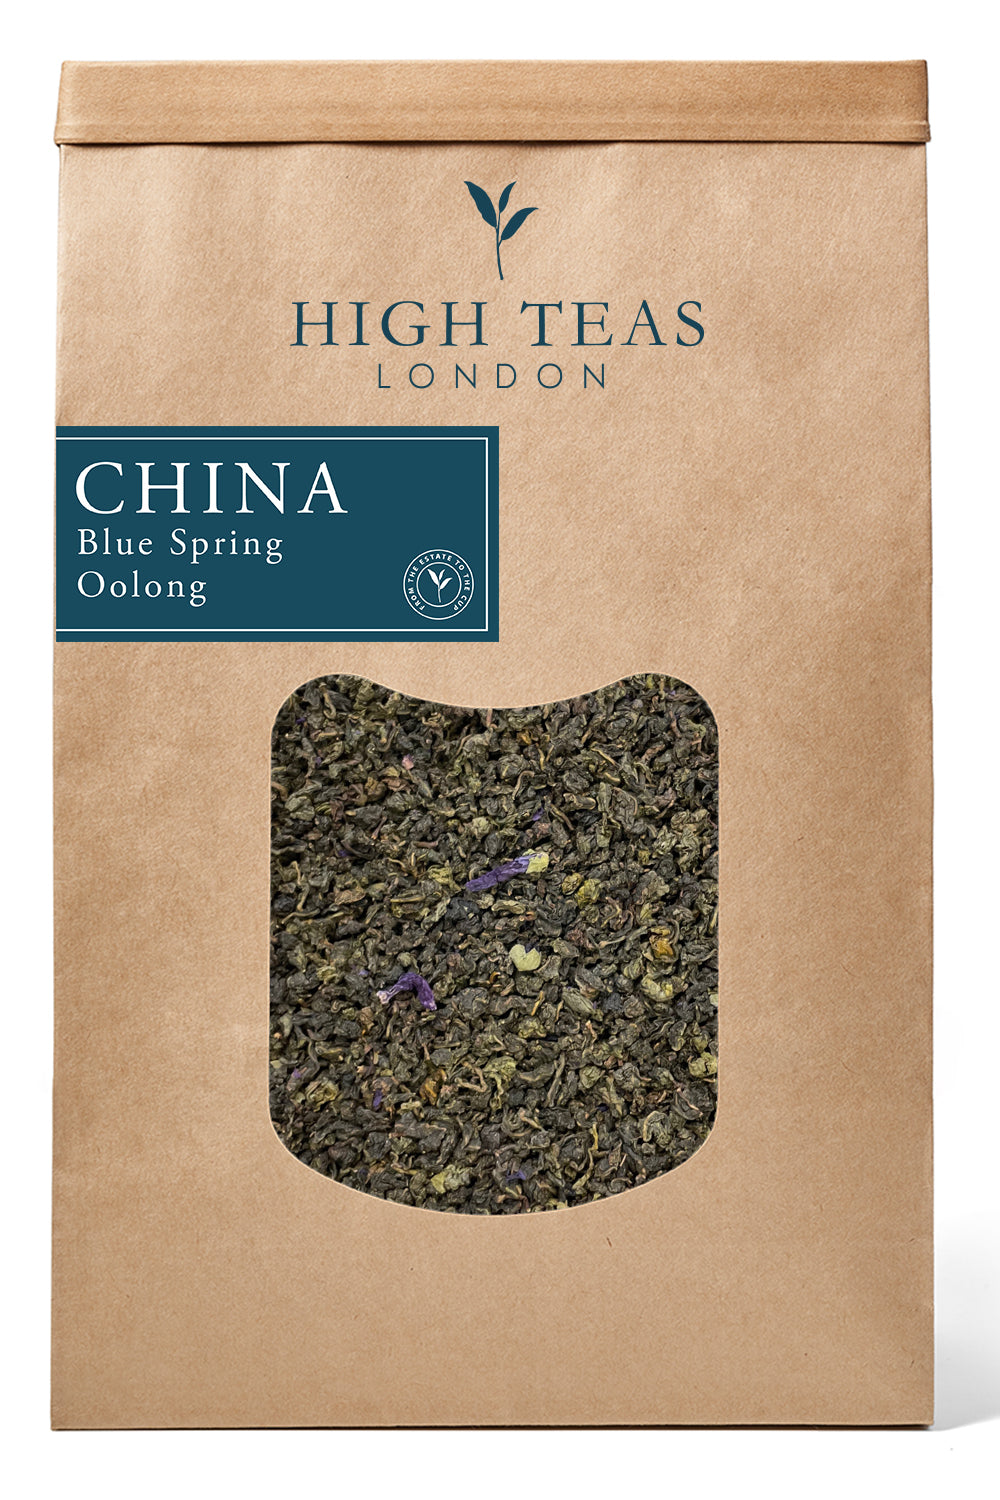 China - Blue Spring Oolong-500g-Loose Leaf Tea-High Teas